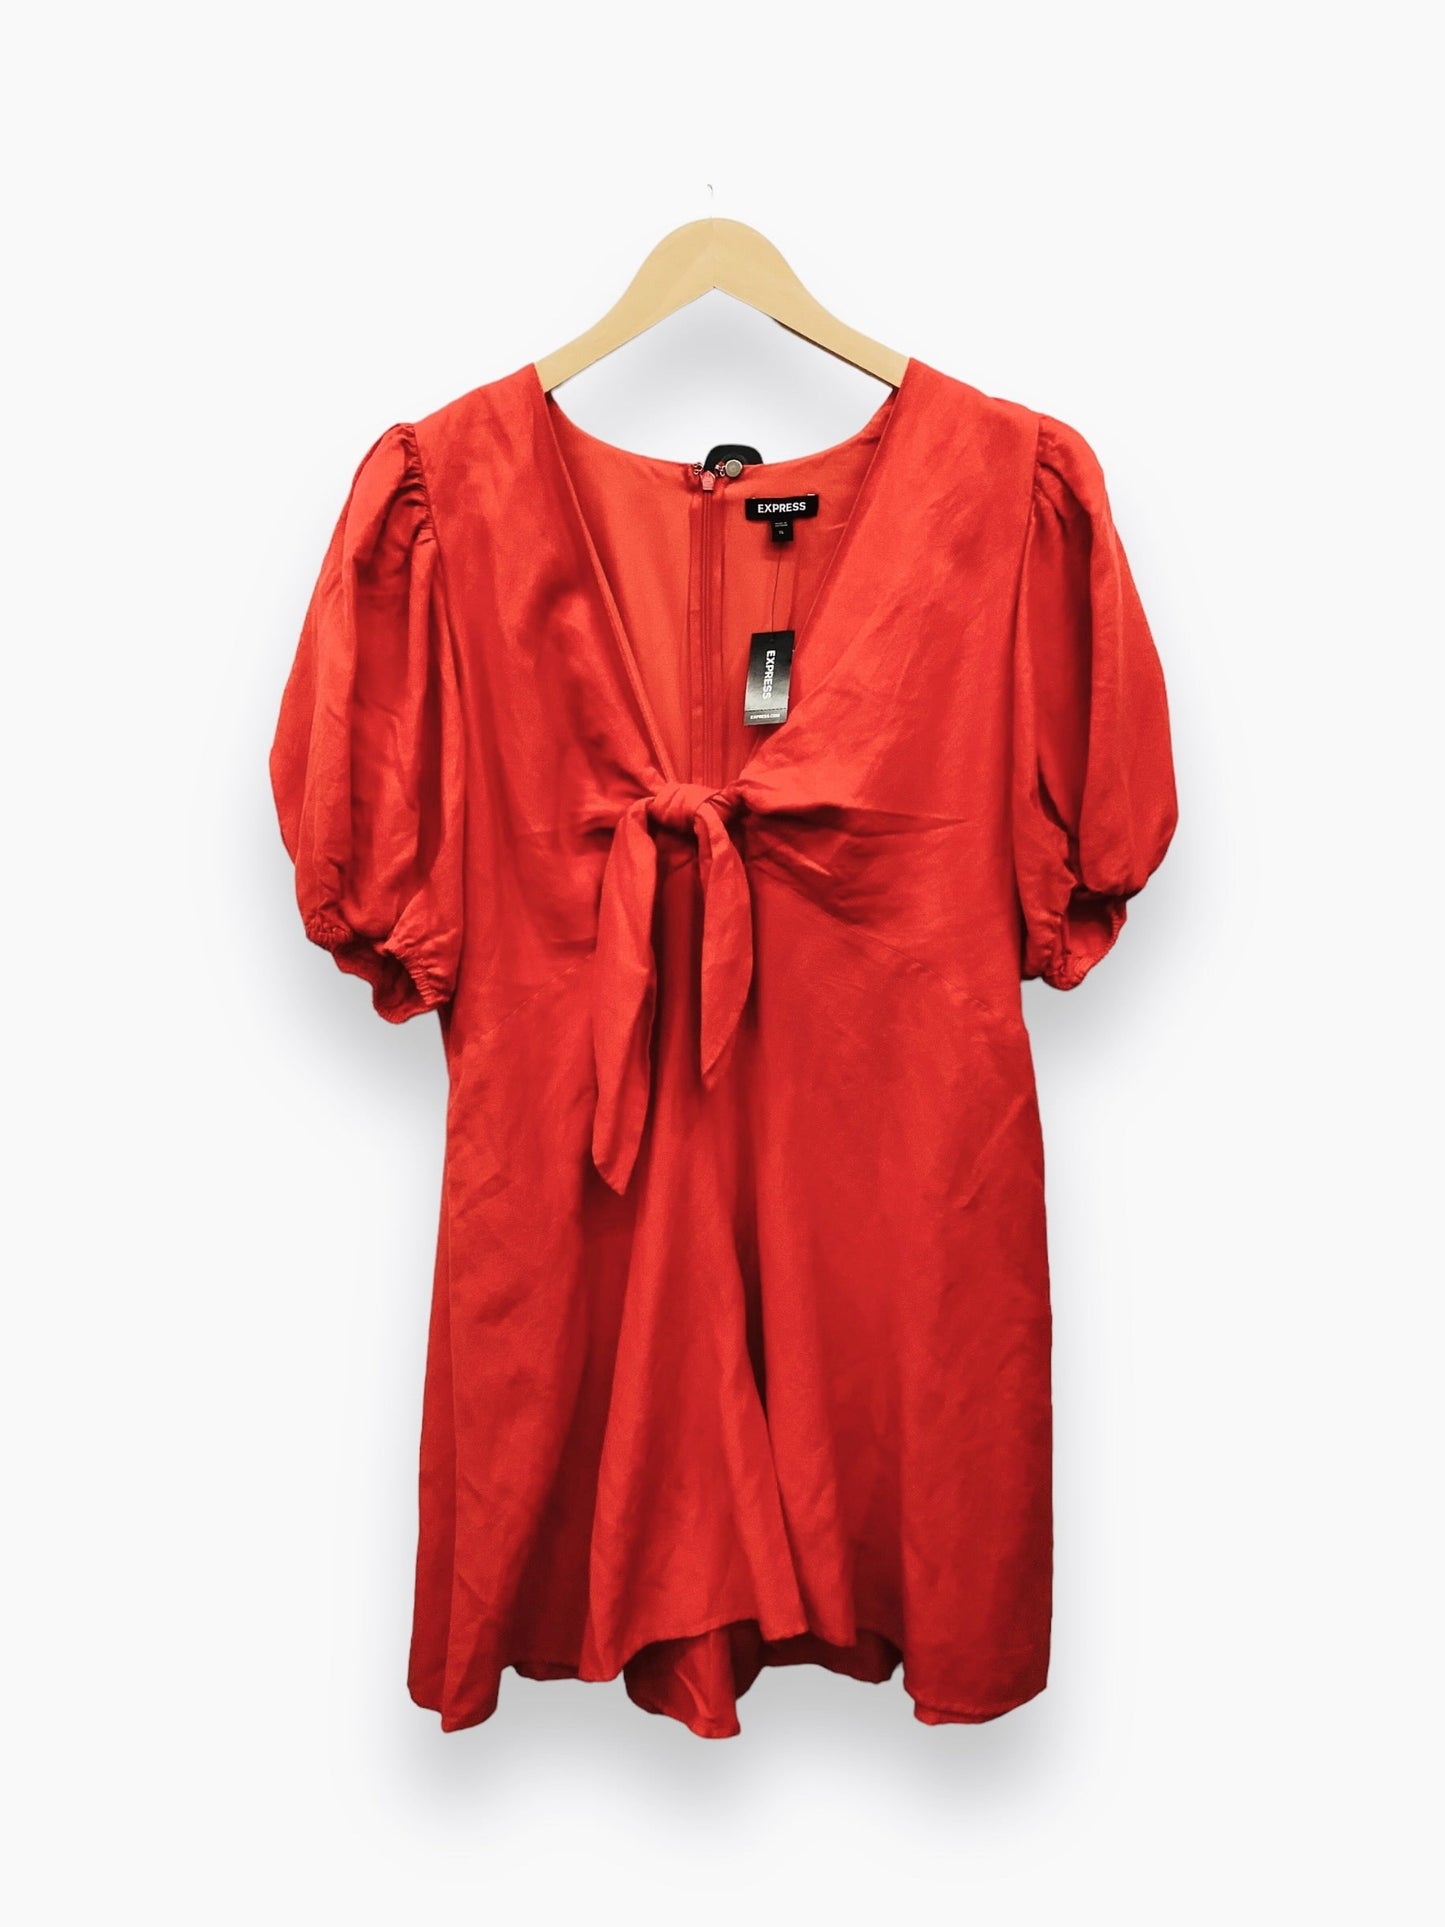 NWT Red Dress Casual Midi Express, Size Xl